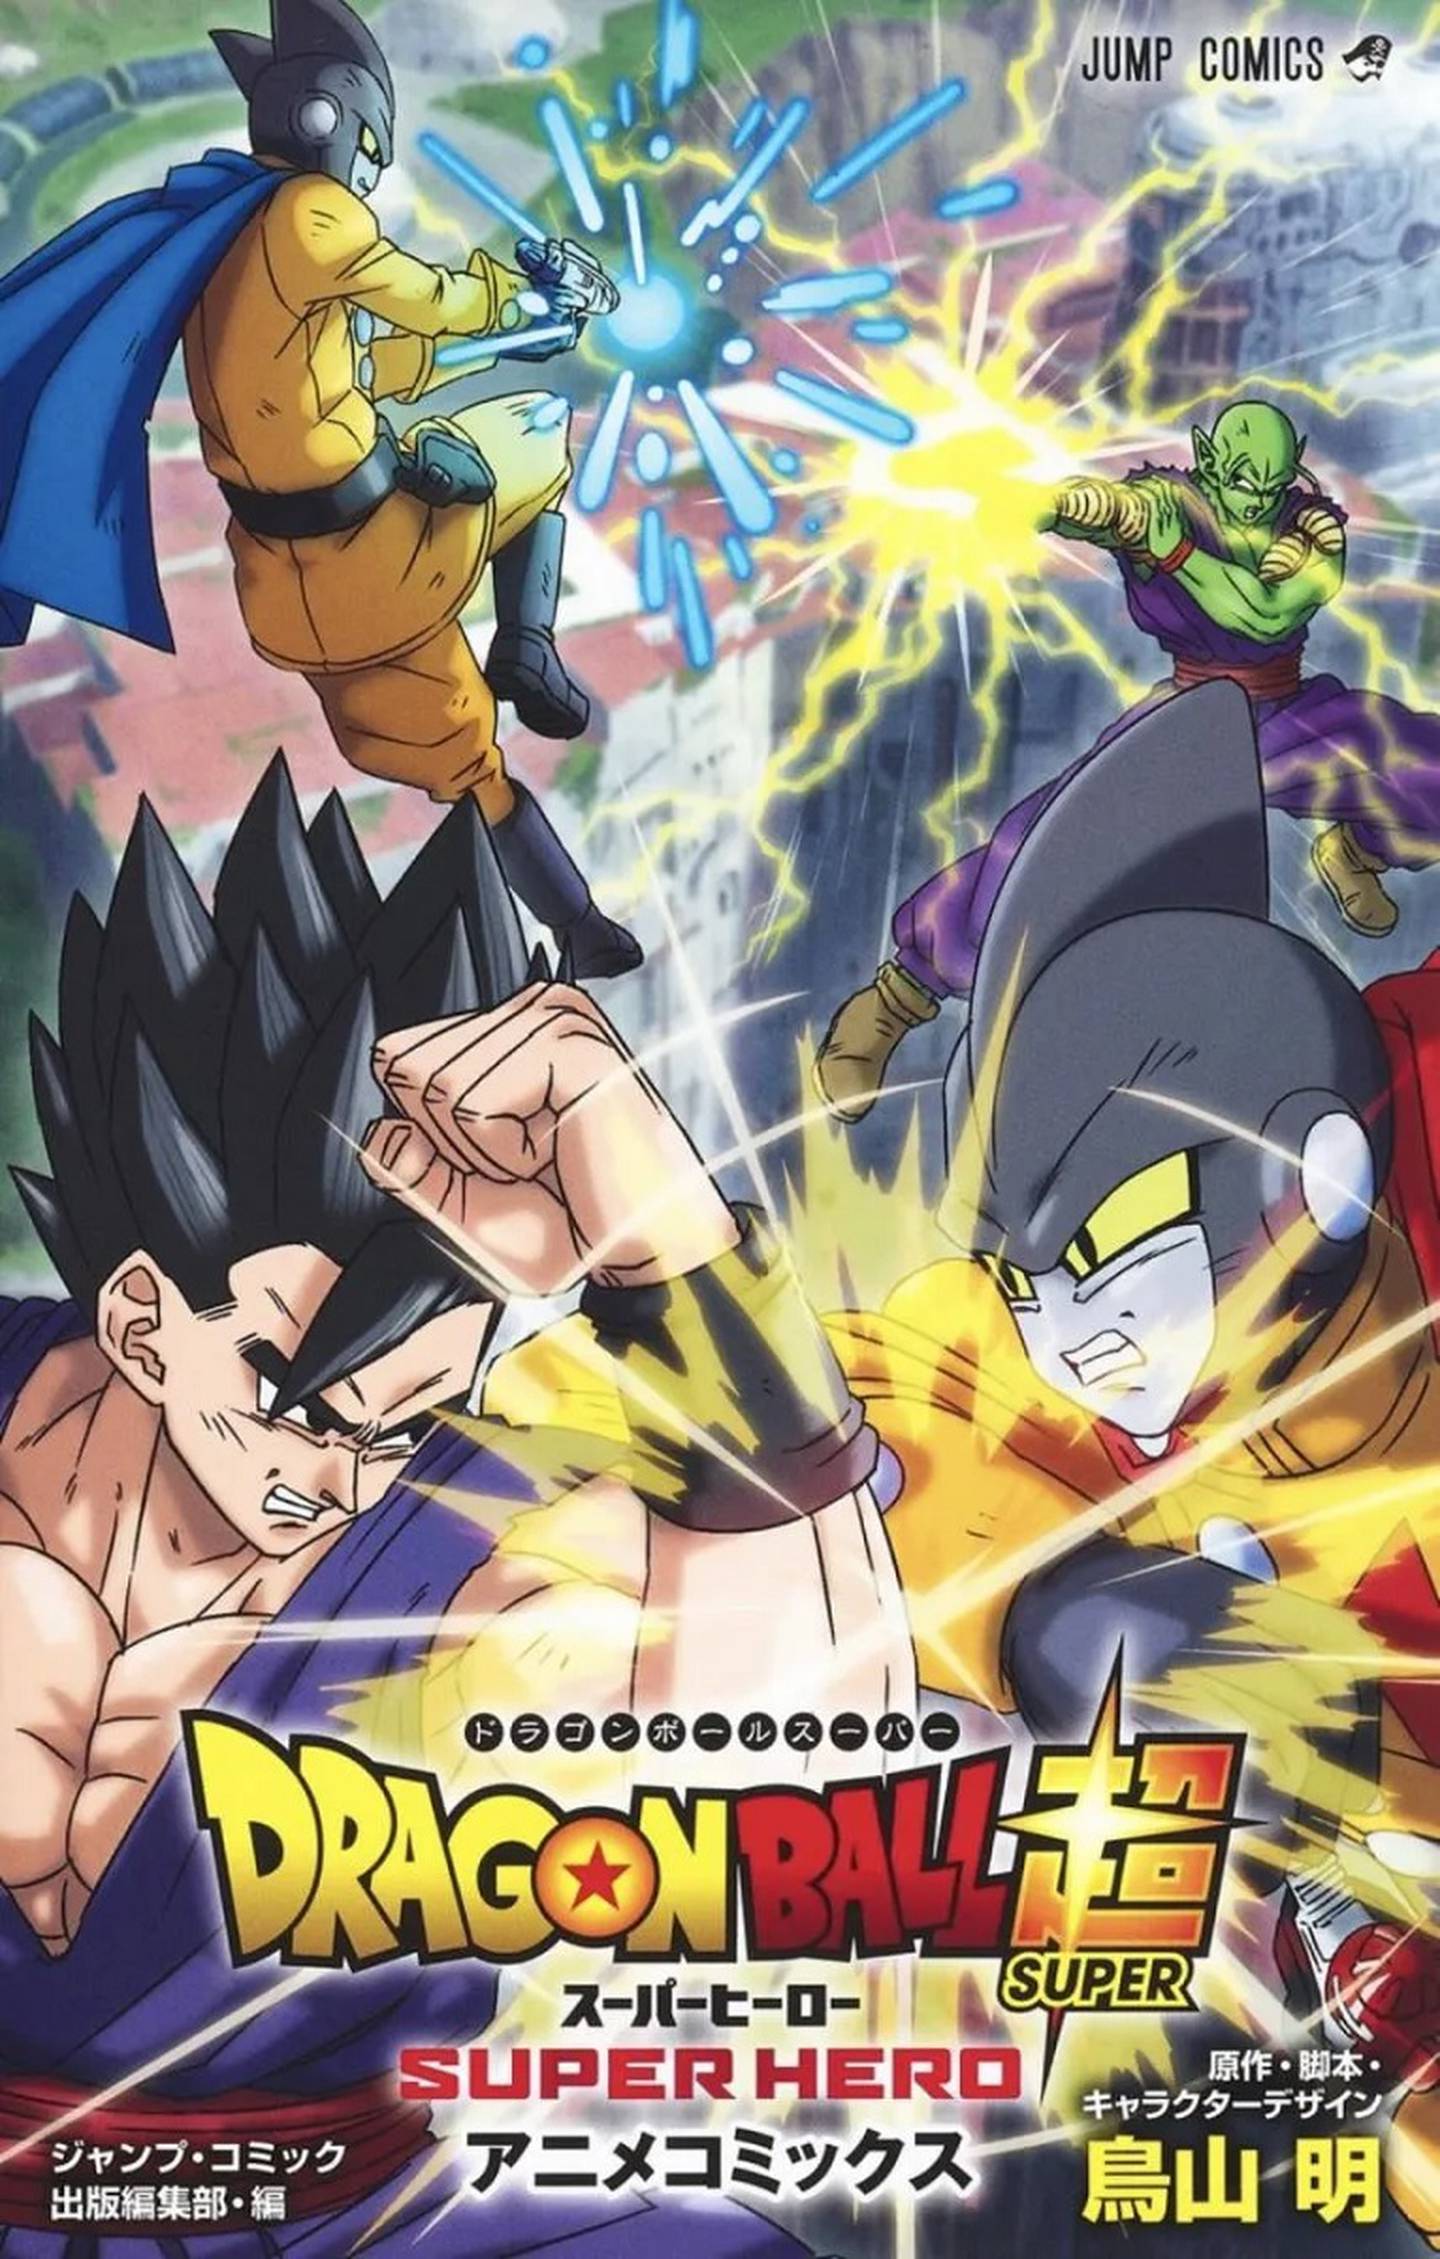 Dragon Ball Super: Super Hero manga